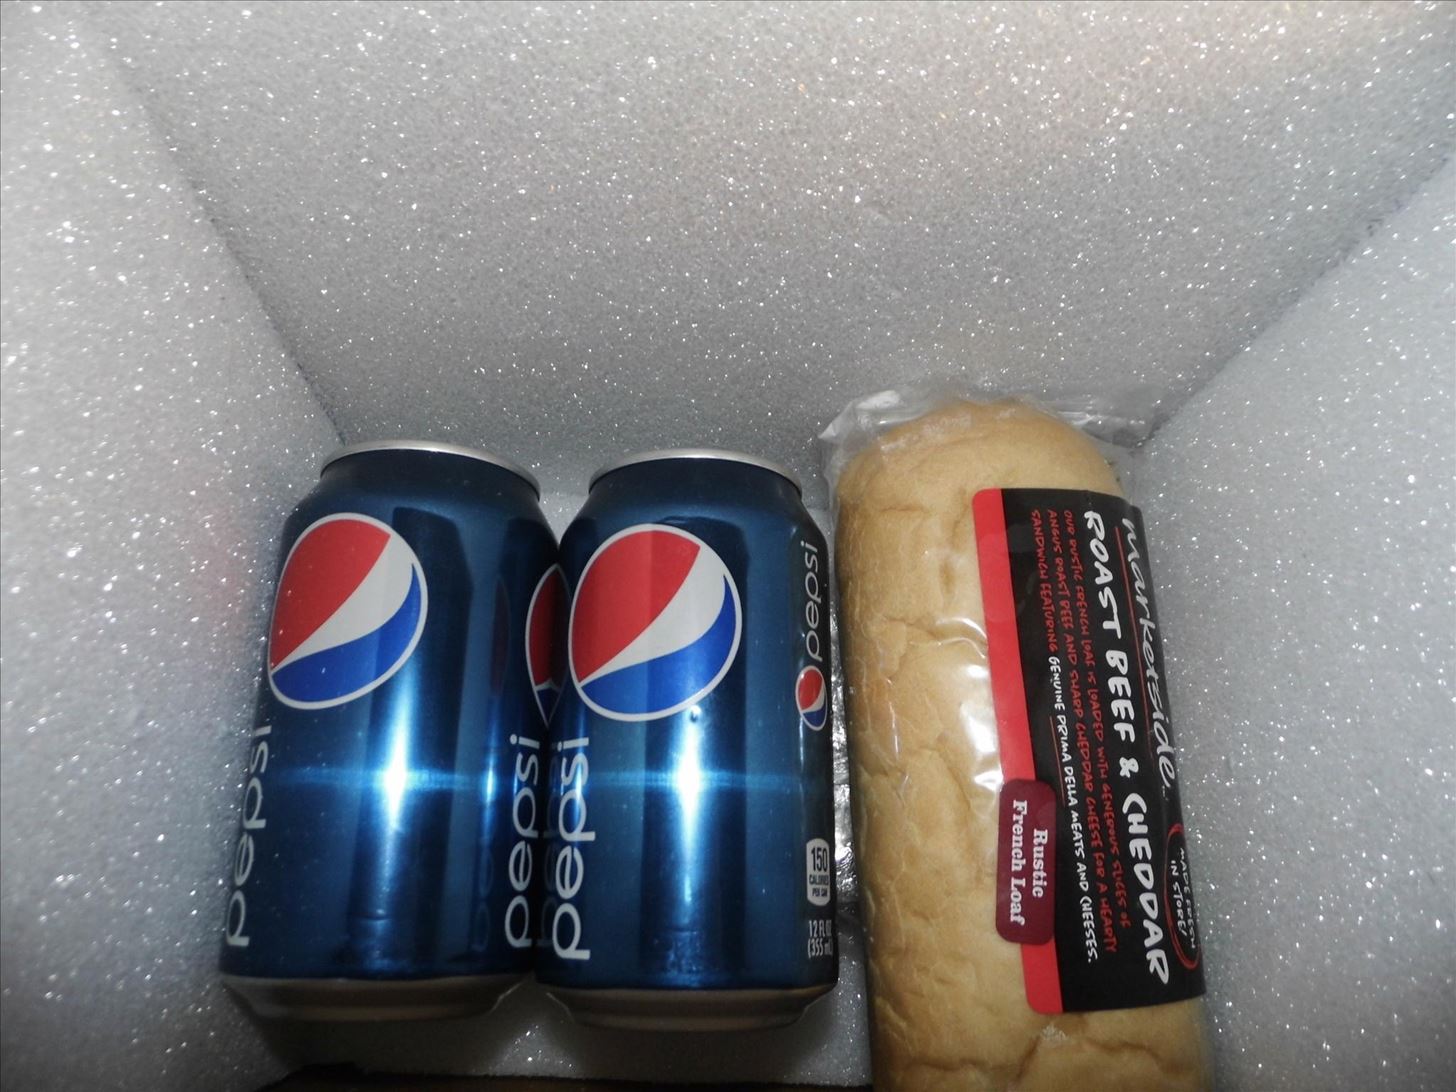 How to Make a Soda-Box Soda Cooler